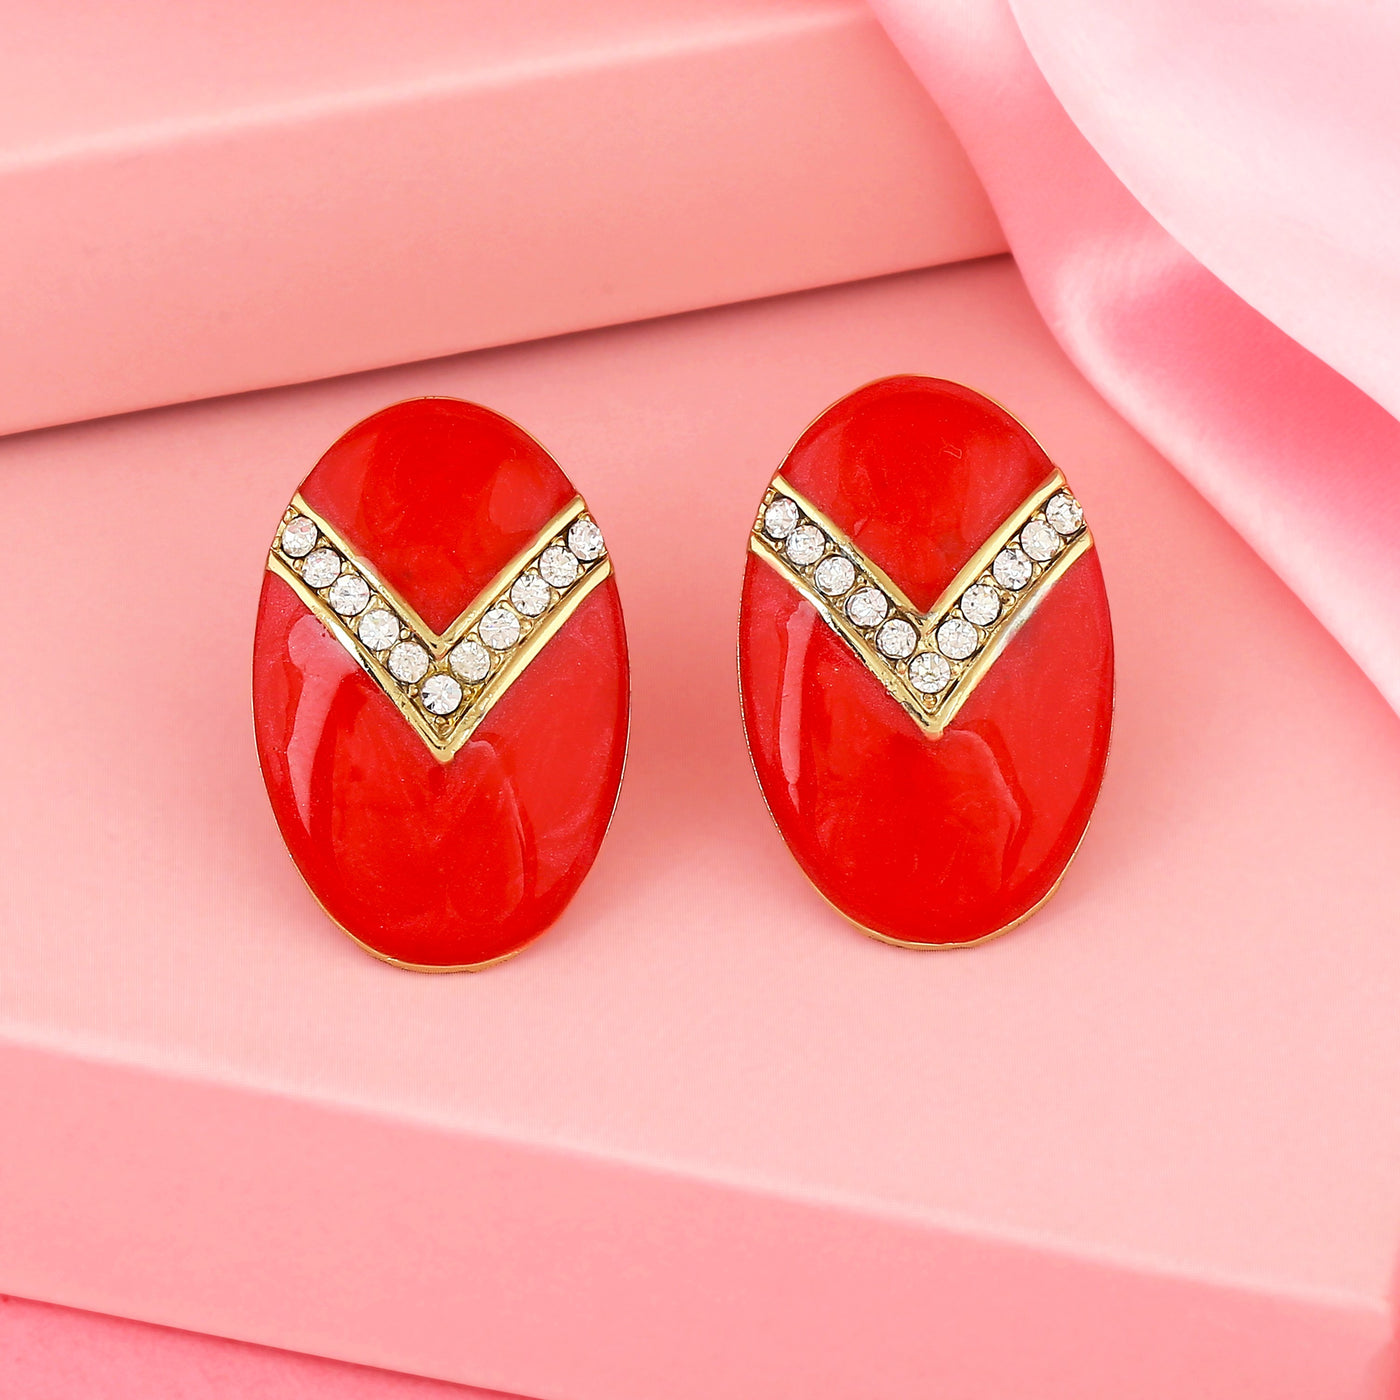 Estele RED colour and white colour stones studs for women